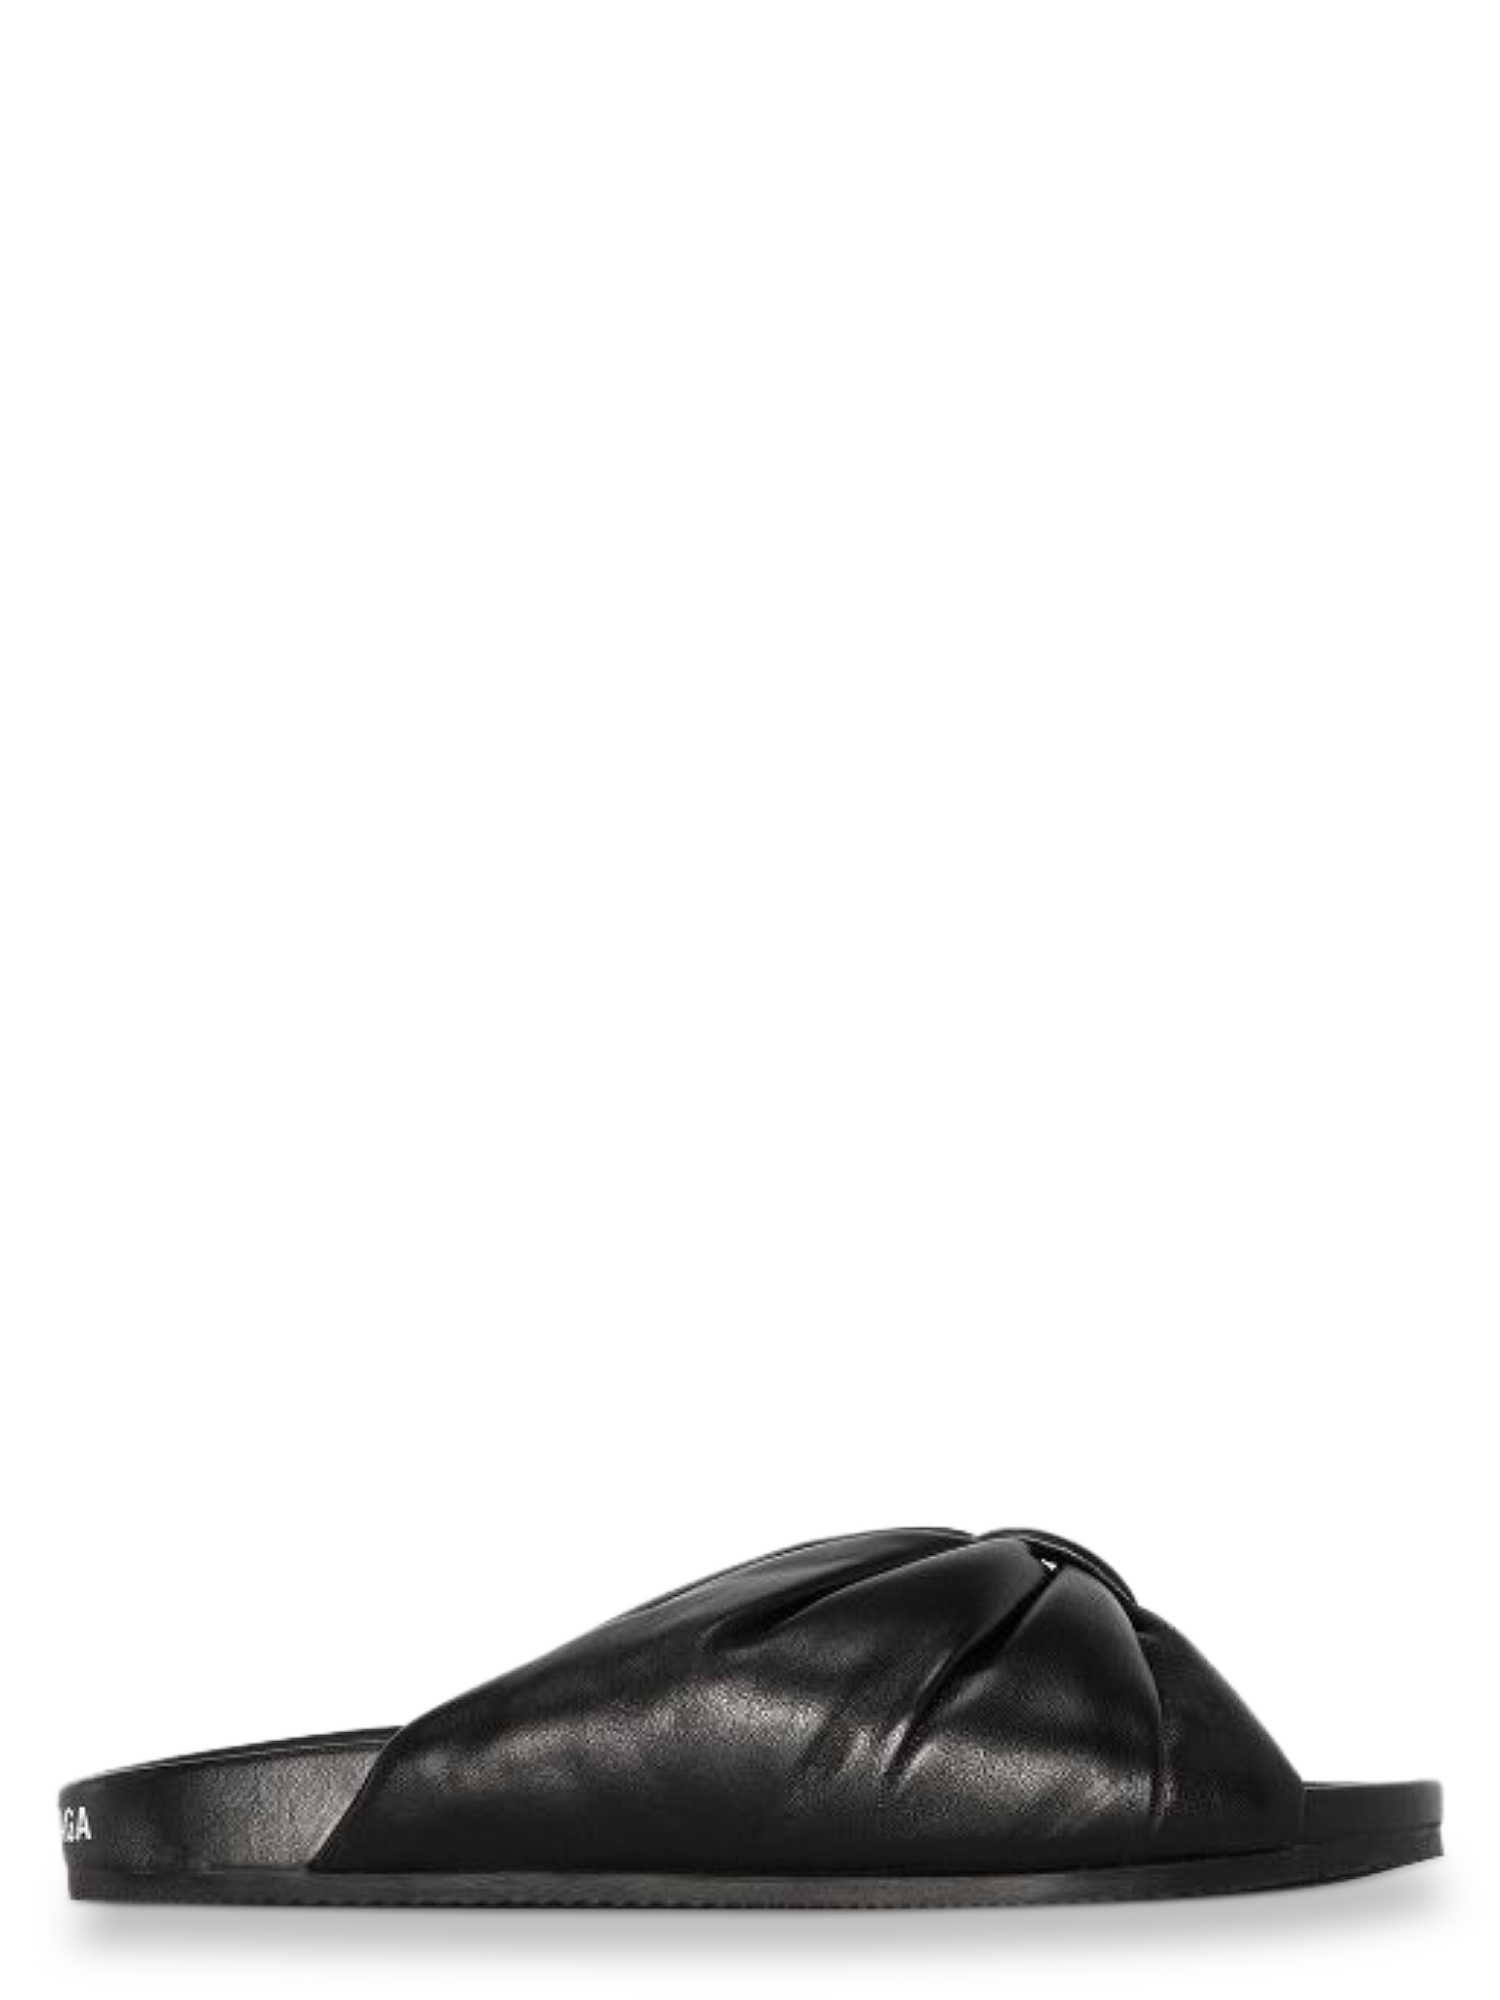 Tongs Pour Femme - Balenciaga - En Leather Black - Taille: IT 38 - EU 38